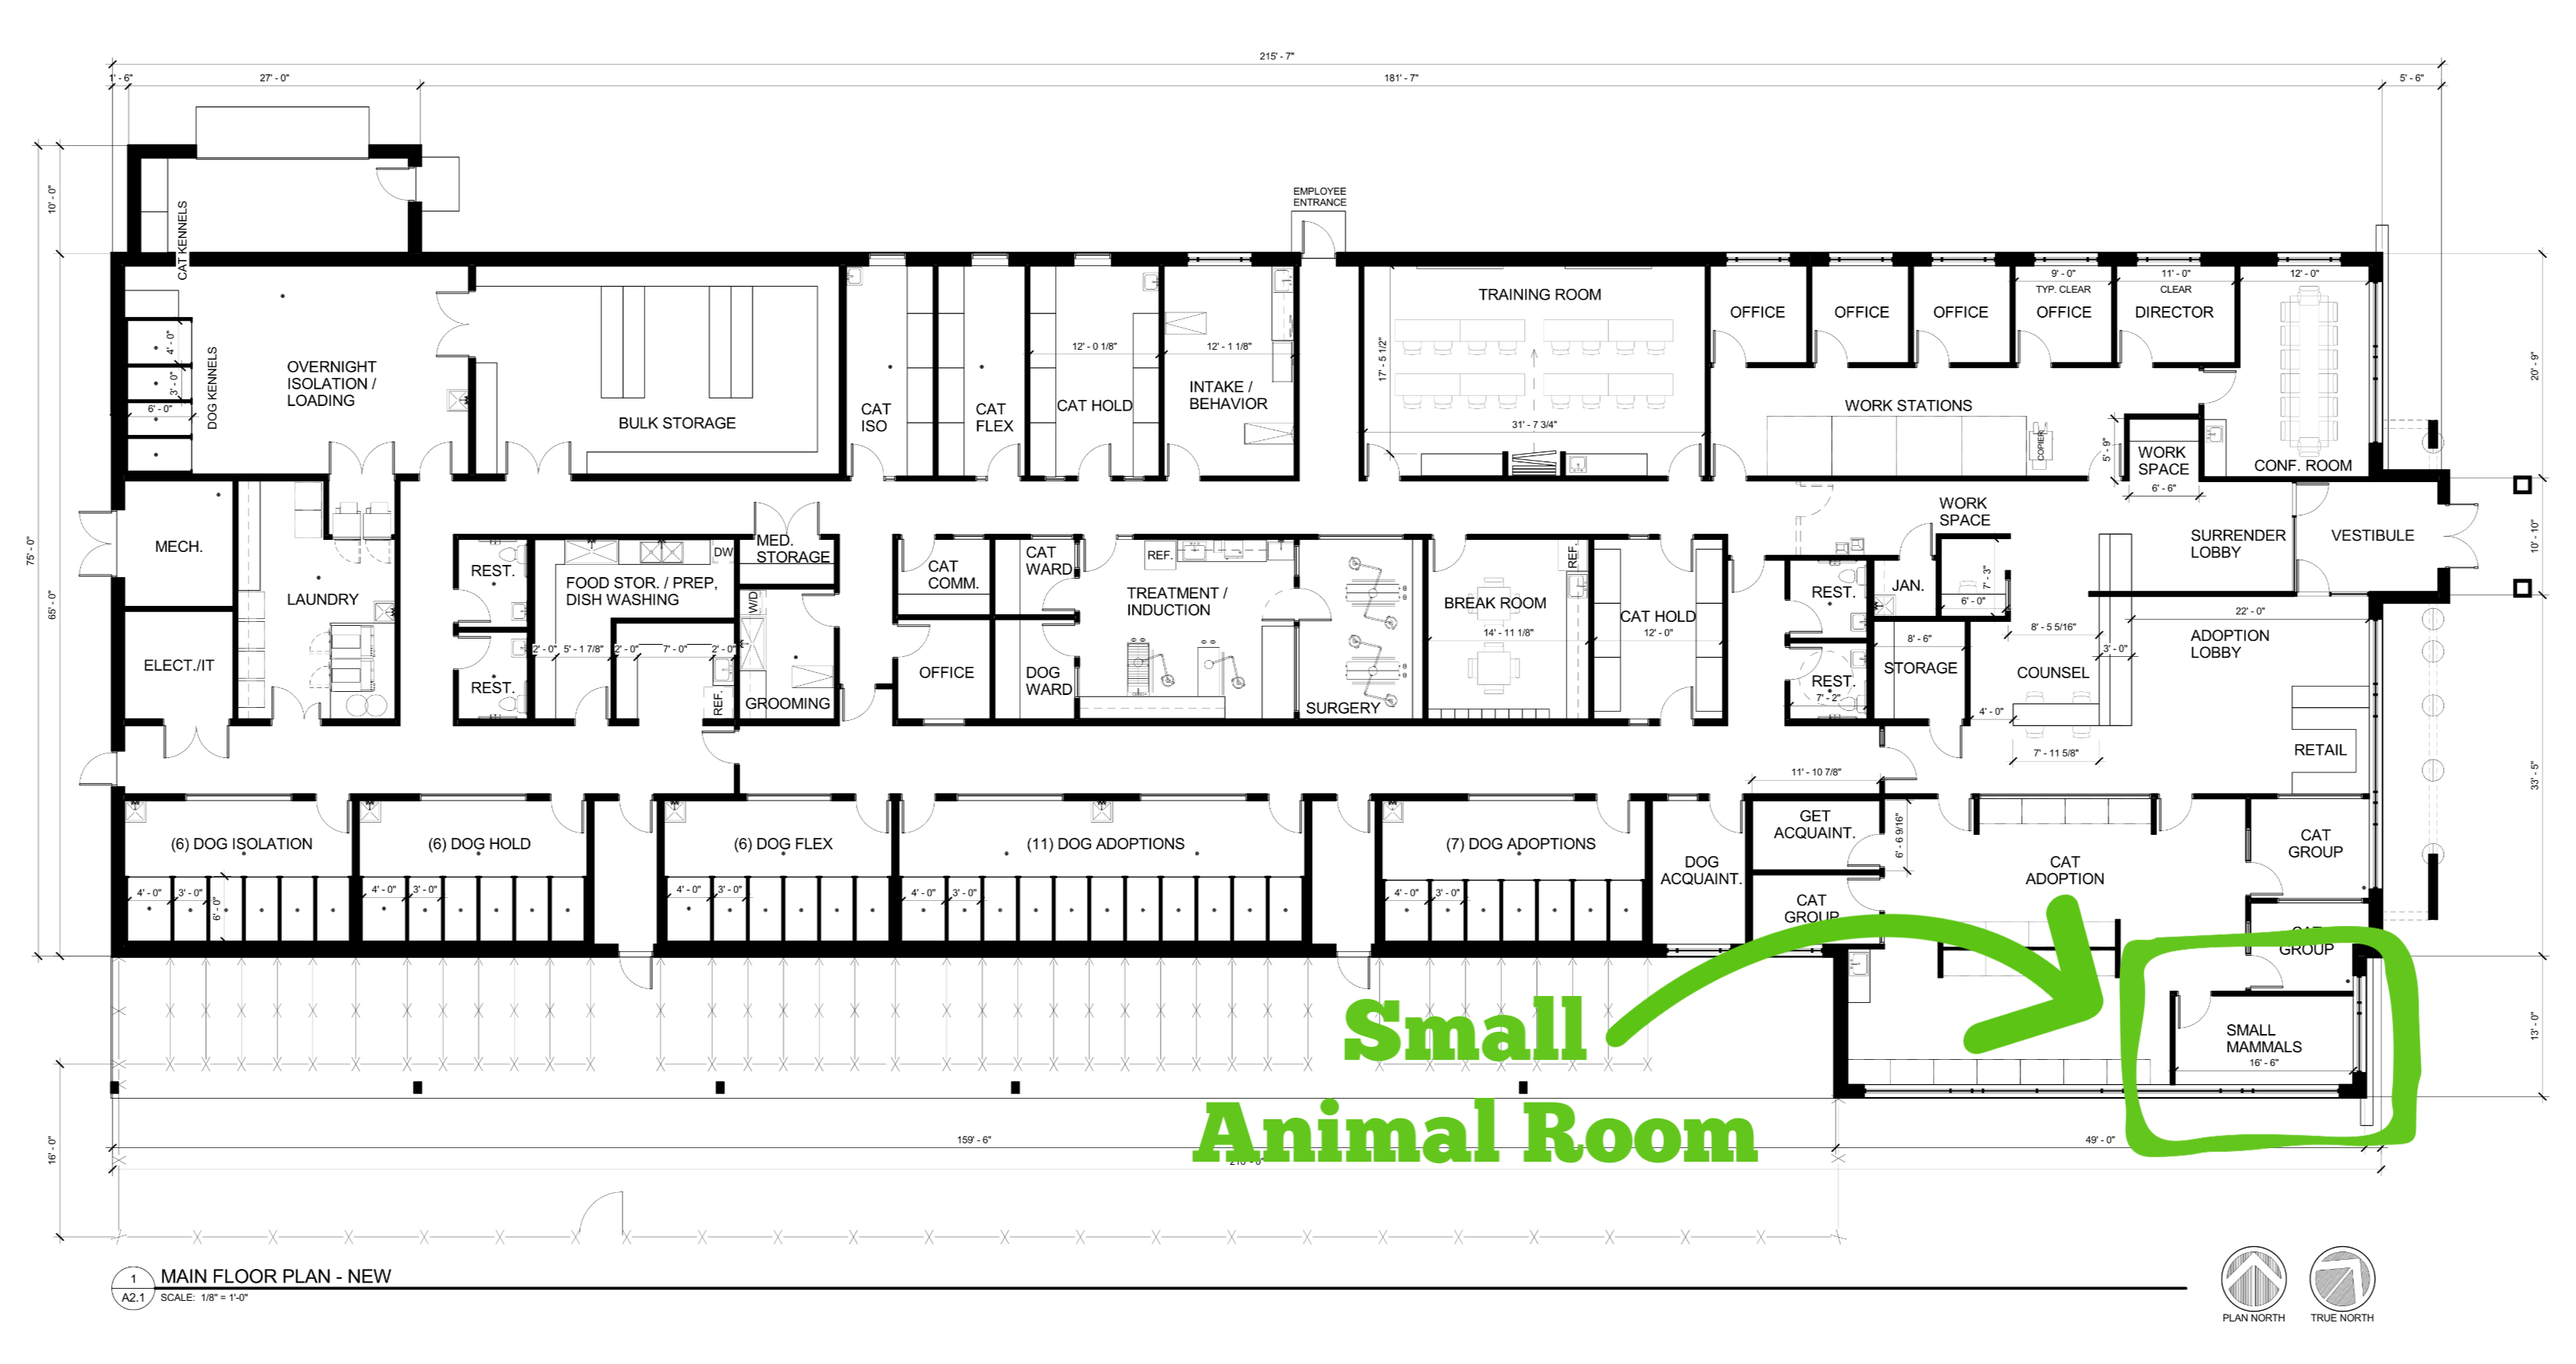 Small Animal Room